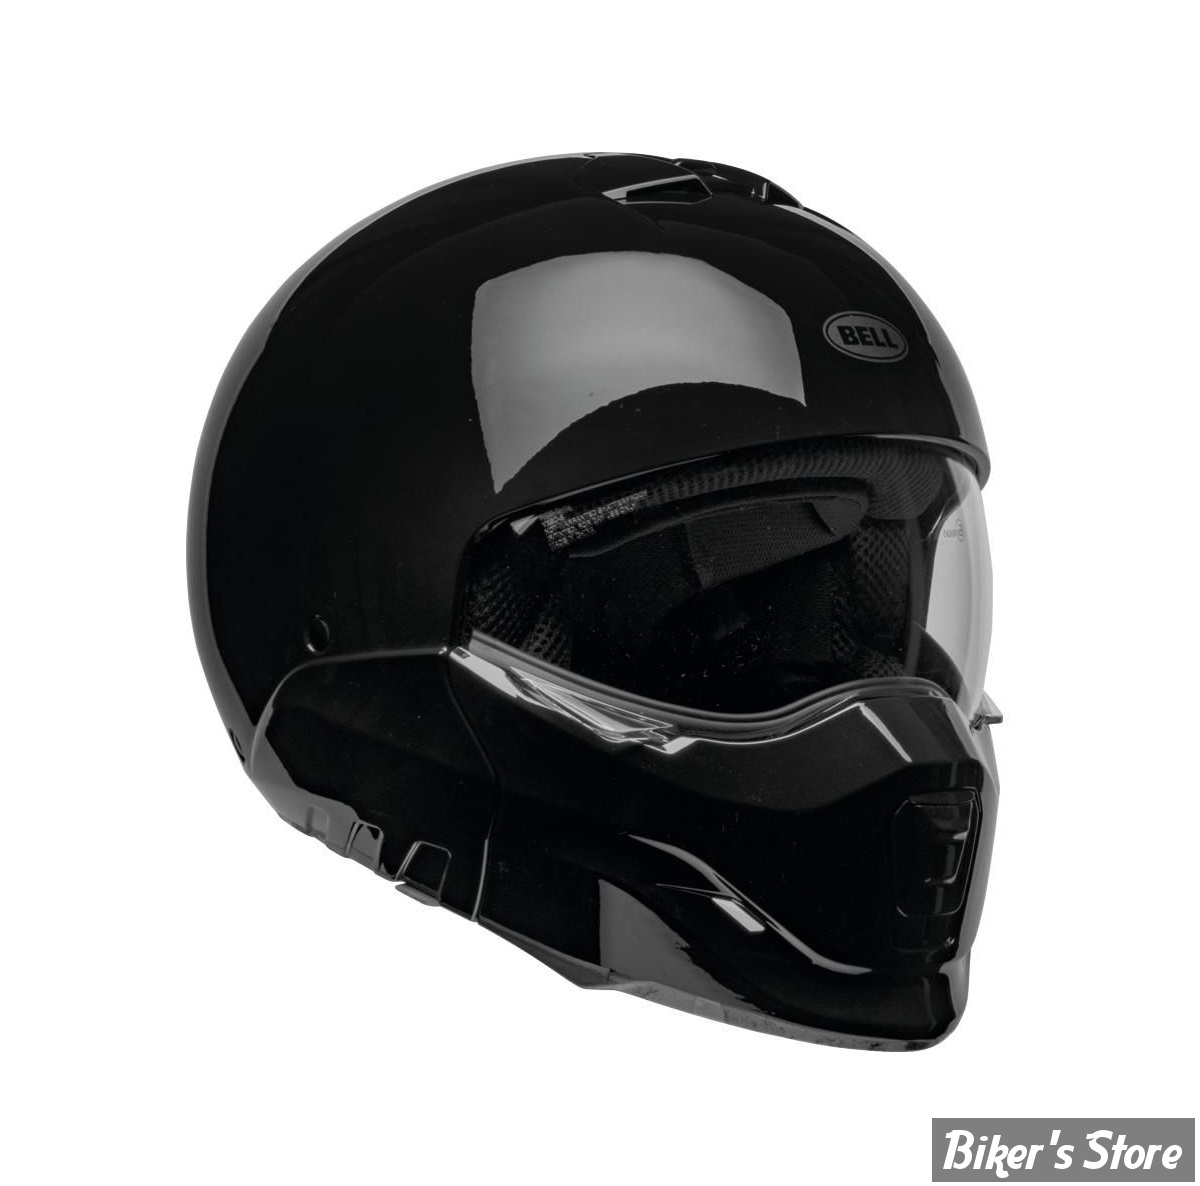 - CASQUE BELL - Broozer Modular Helmet - CONVERTIBLE - COULEUR : NOIR BRILLANT - TAILLE : M